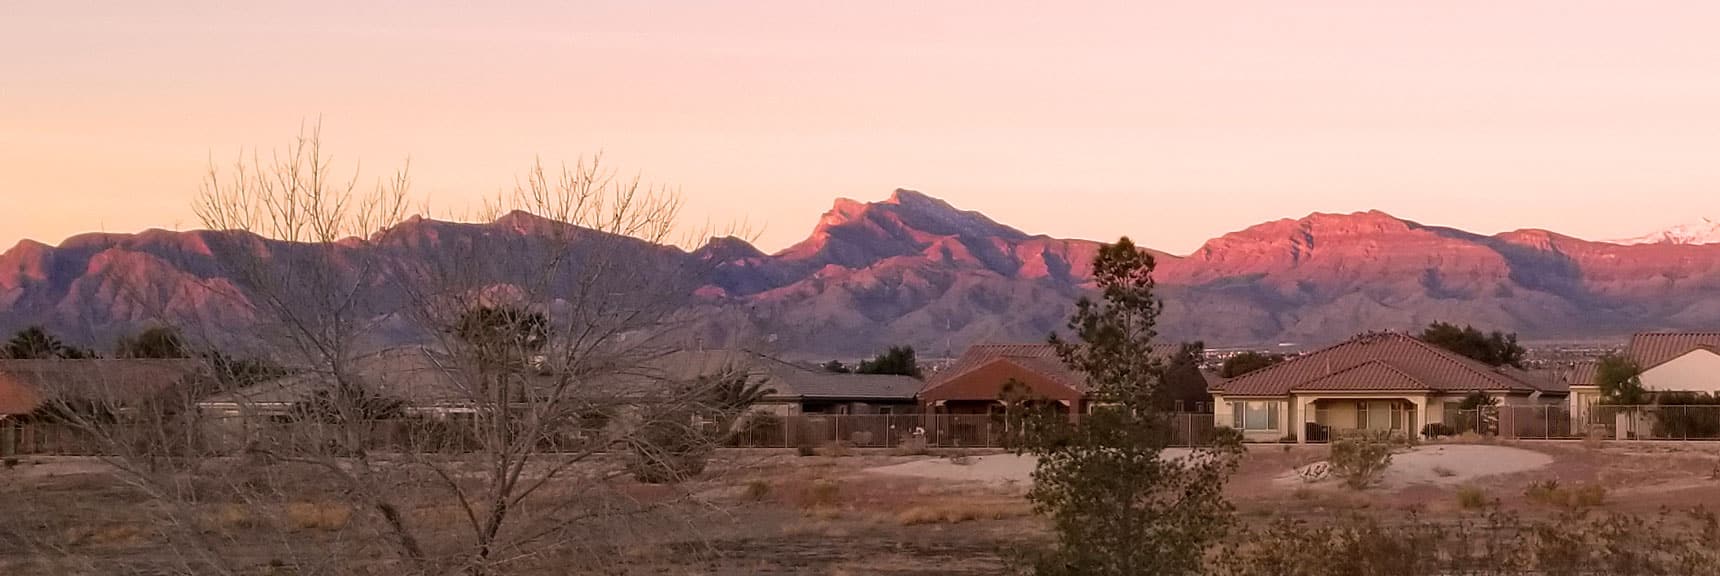 La Madre Mountain Backyard Sunrise from Centennial Hills, Nevada